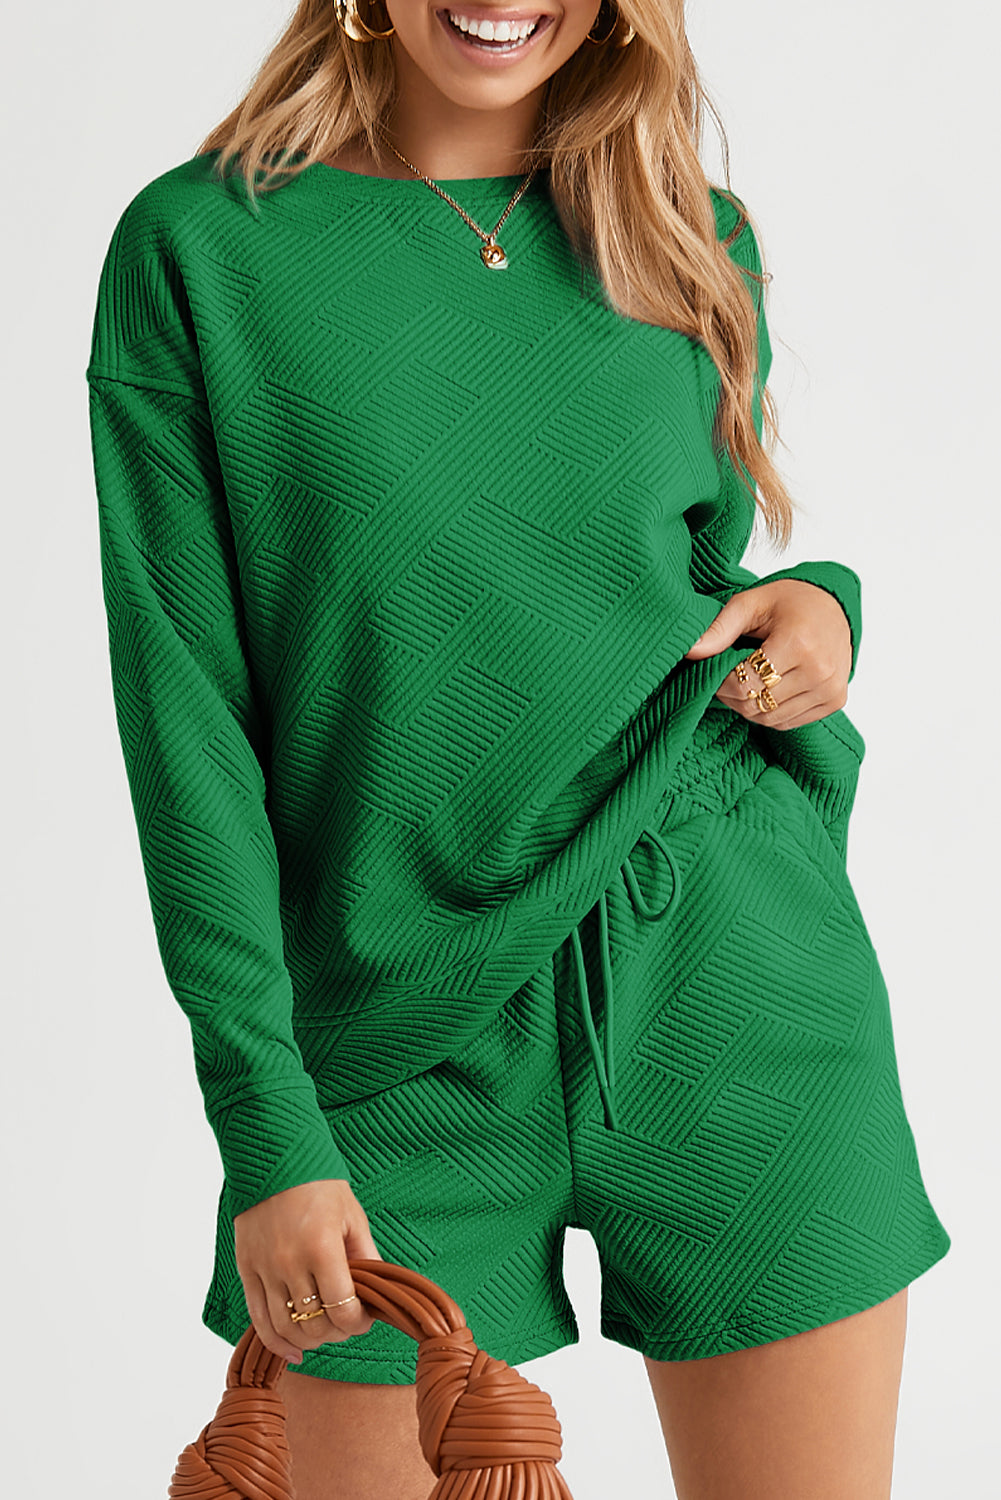 Green Textured Long Sleeve Top and Drawstring Shorts Set - SELFTRITSS